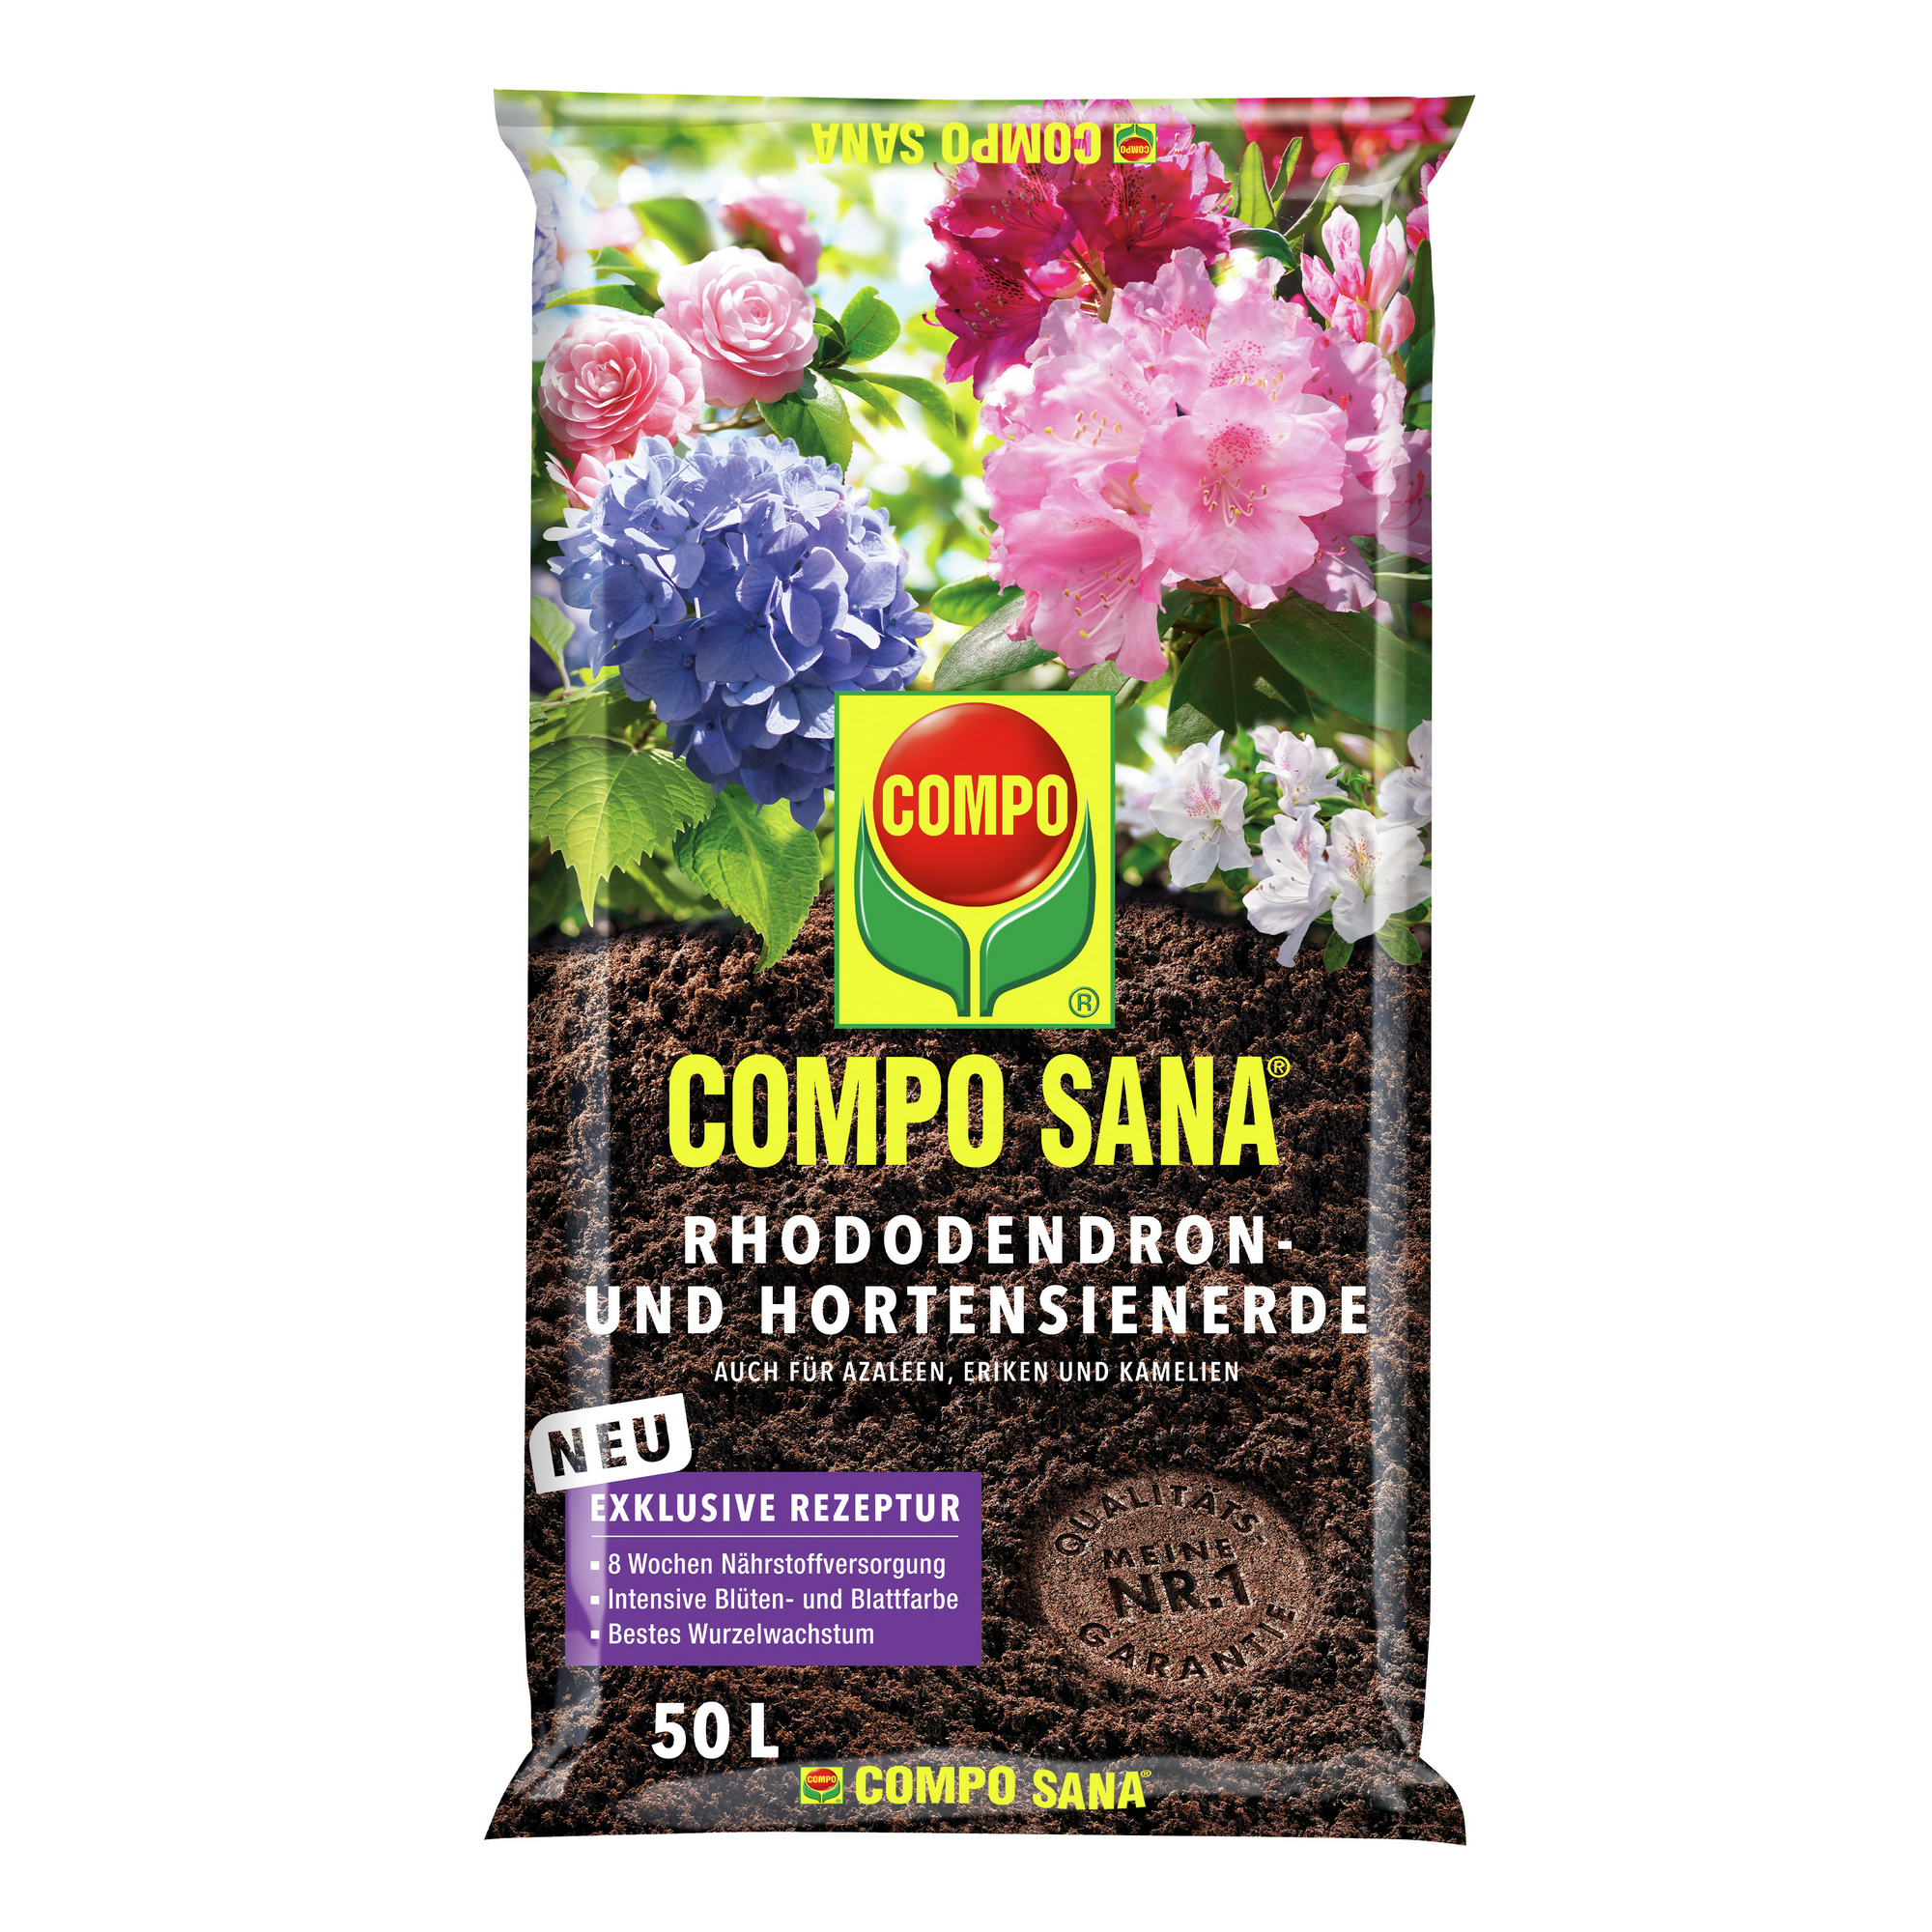 Compo Sana® Rhododendron- und Hortensienerde 50 l + product picture